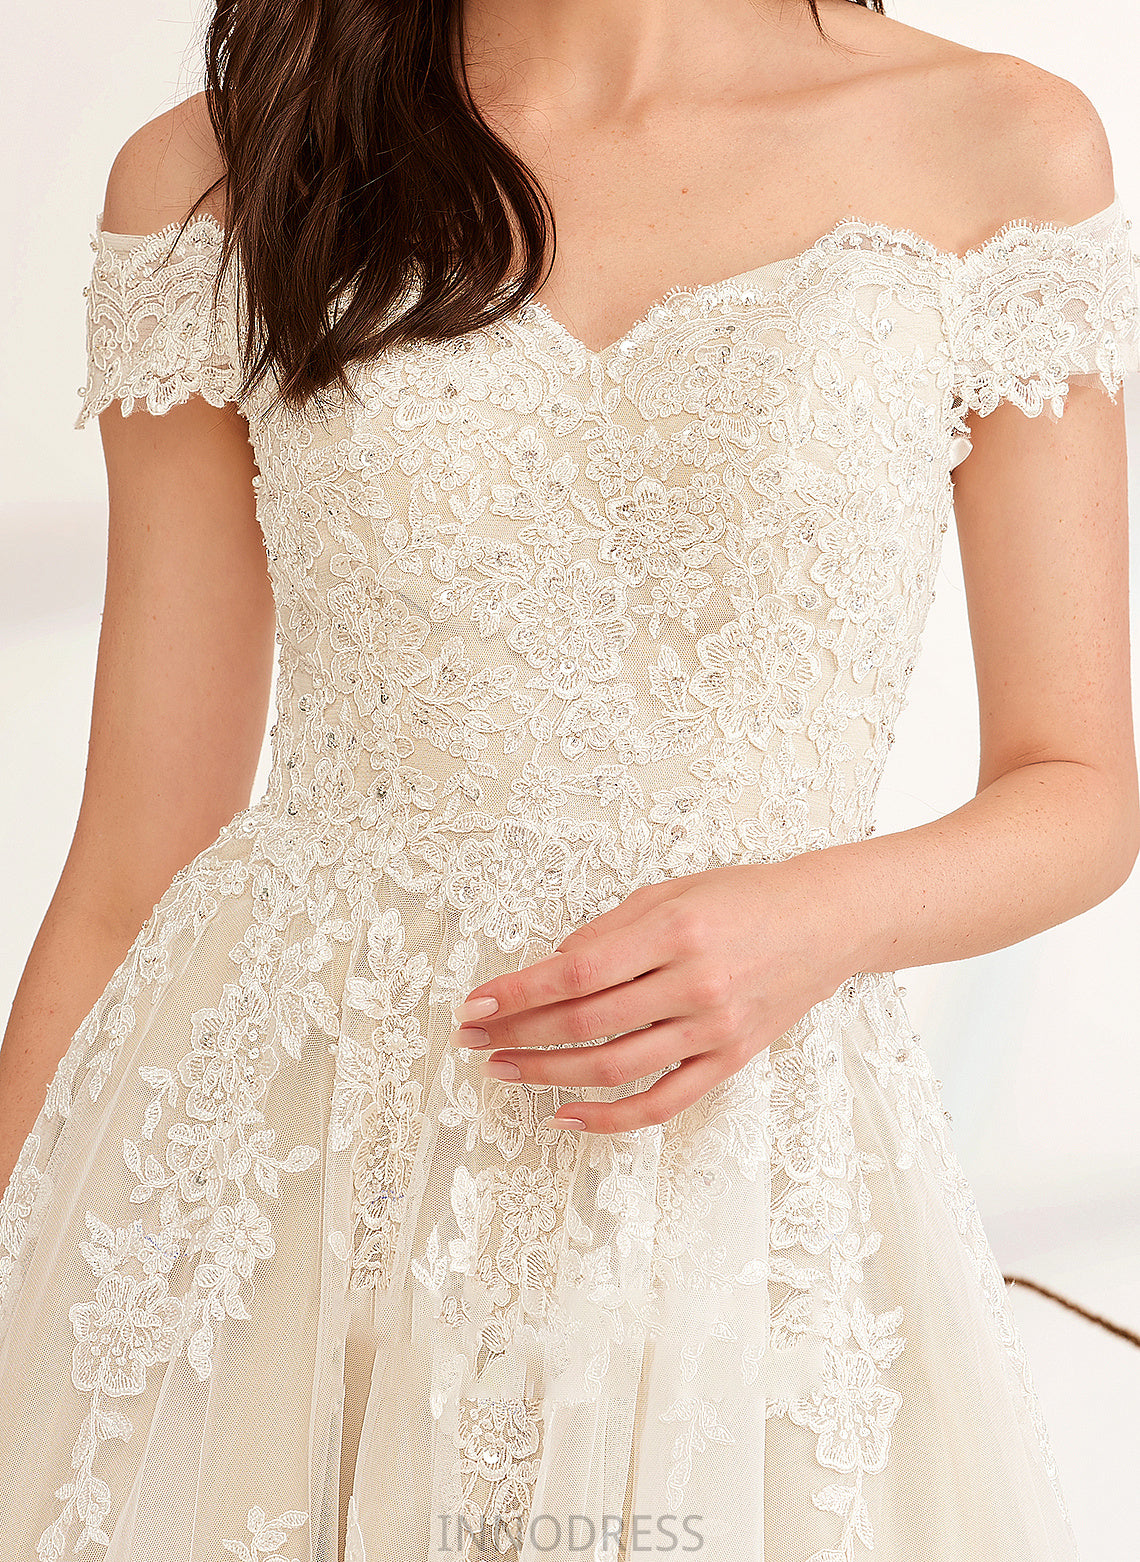 Ball-Gown/Princess Margaret Dress Wedding Dresses Beading Floor-Length With Wedding Off-the-Shoulder Sequins